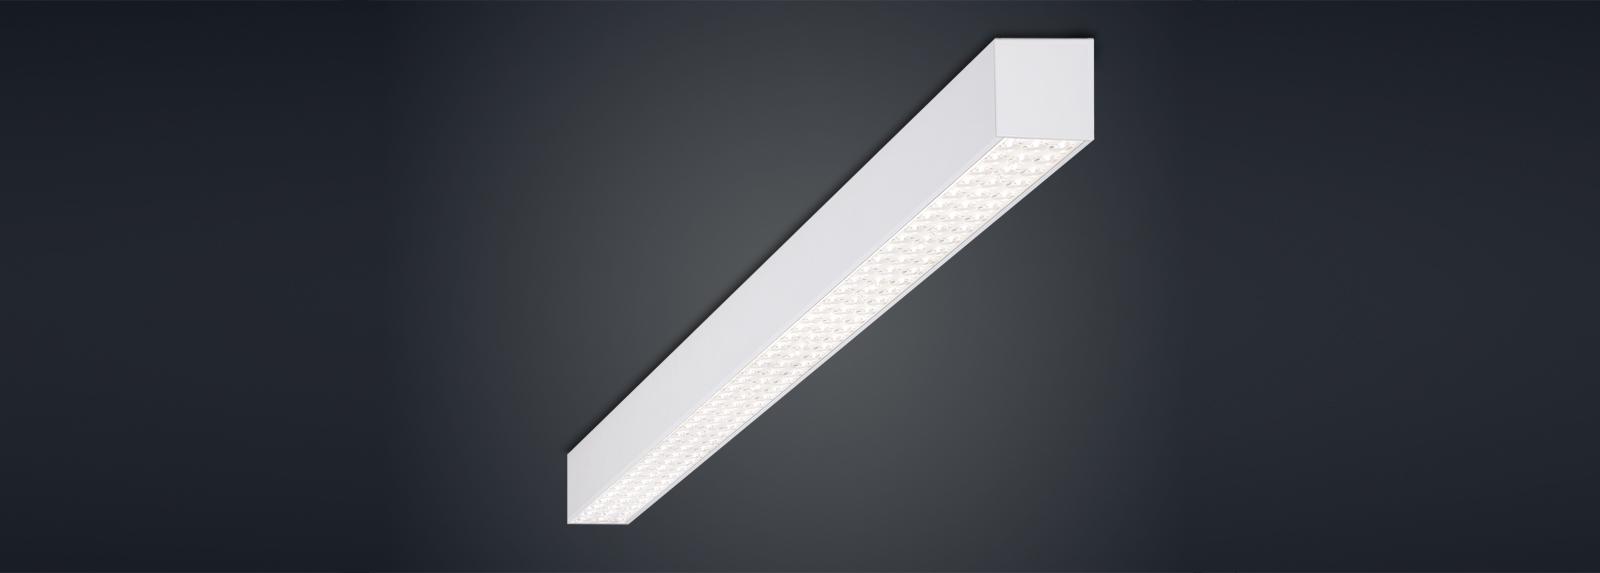 GOWEL 300 | Downlights lineals de superfície